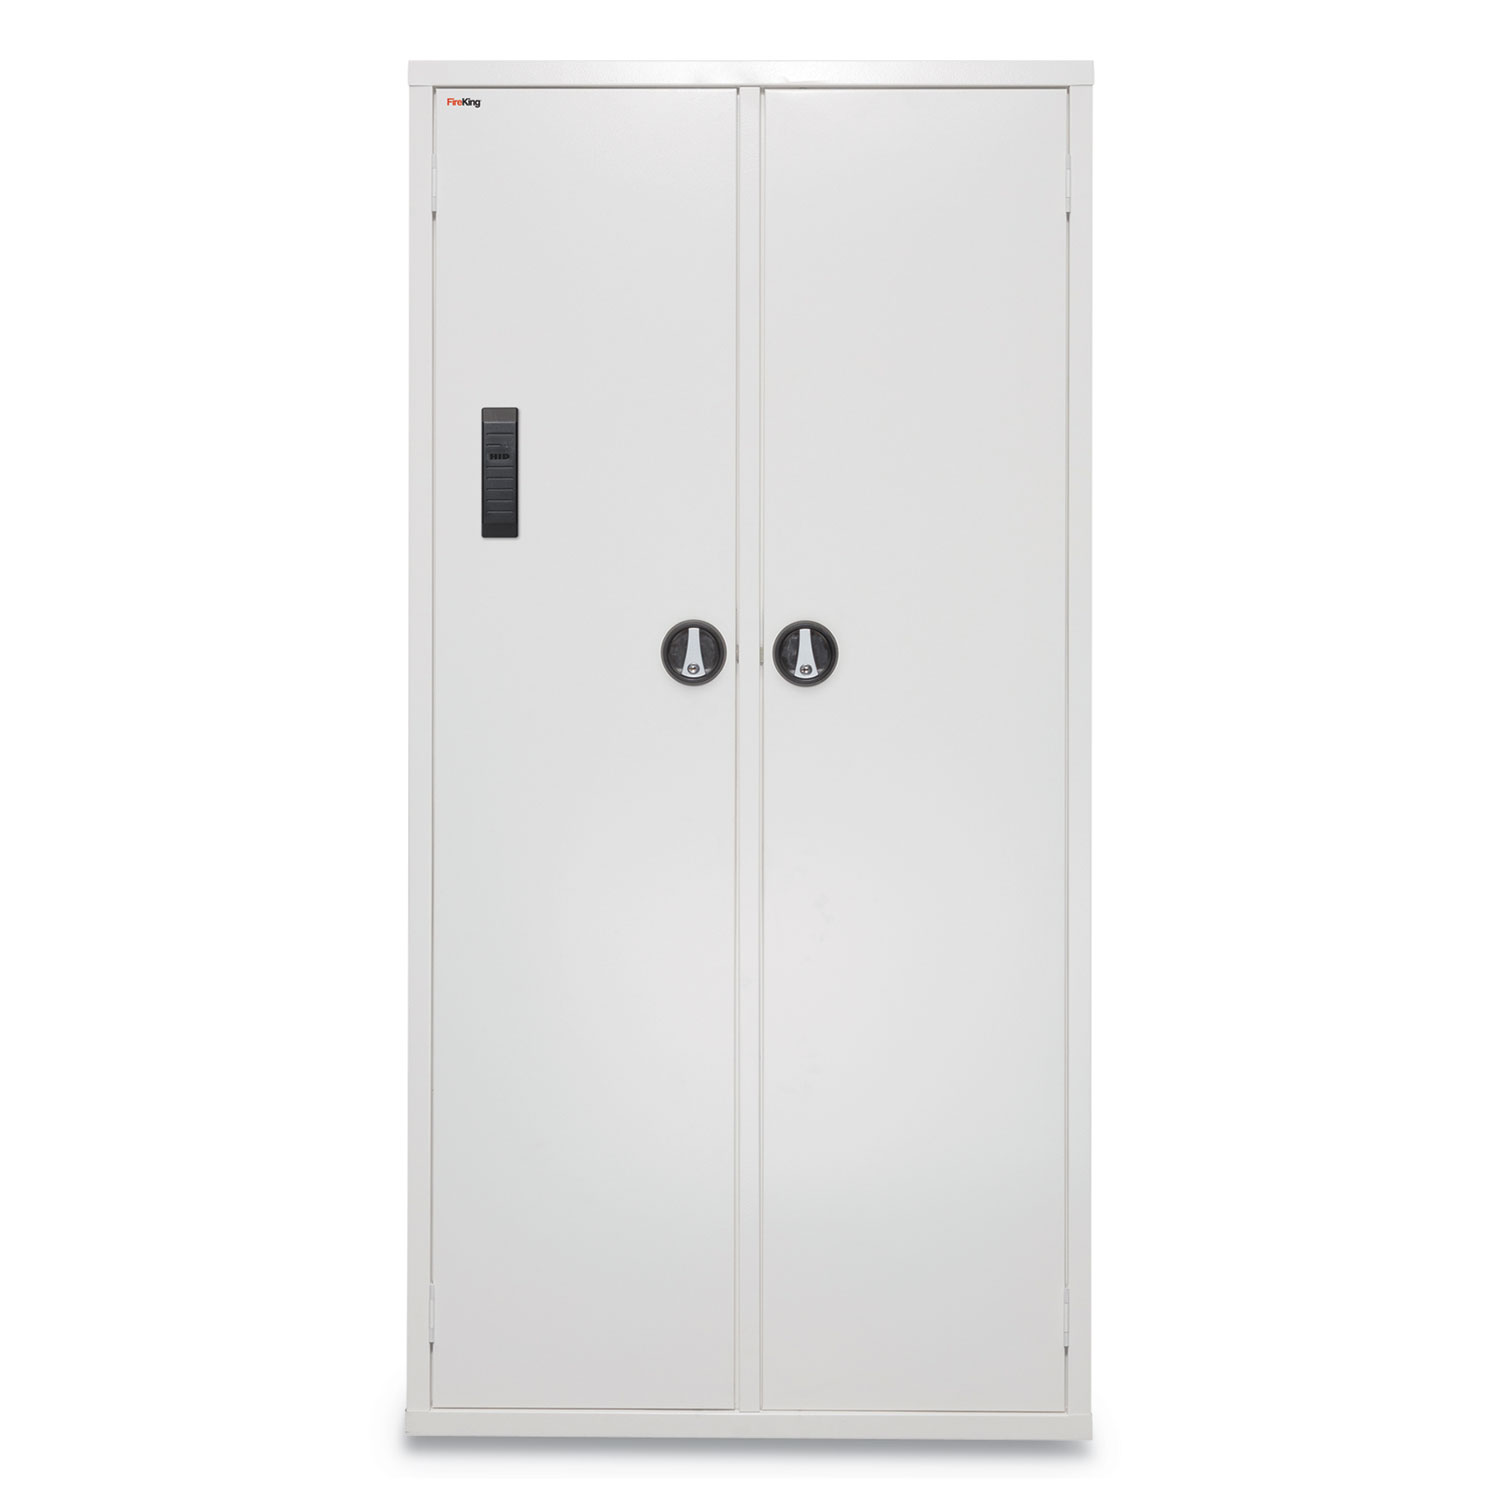  FireKing 72MSC-ELRWT Medical Storage Cabinet with Electronic Lock, 36w x 15d x 72h, White (FIR72MSCELRWT) 